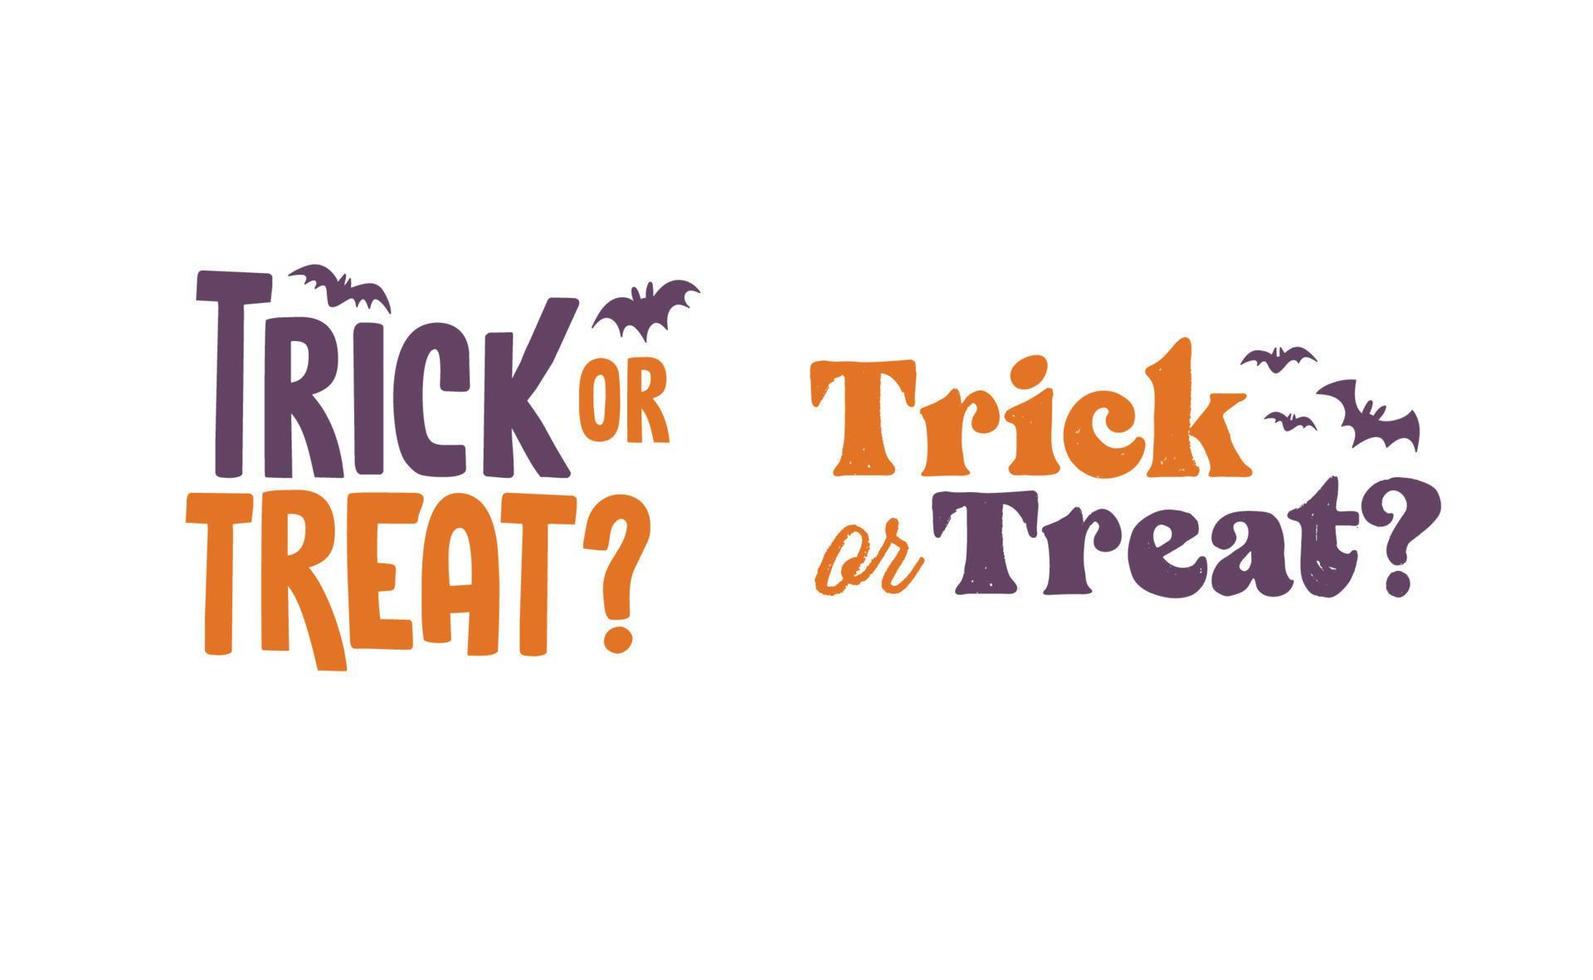 Trick or treat lettering design. Halloween message. vector